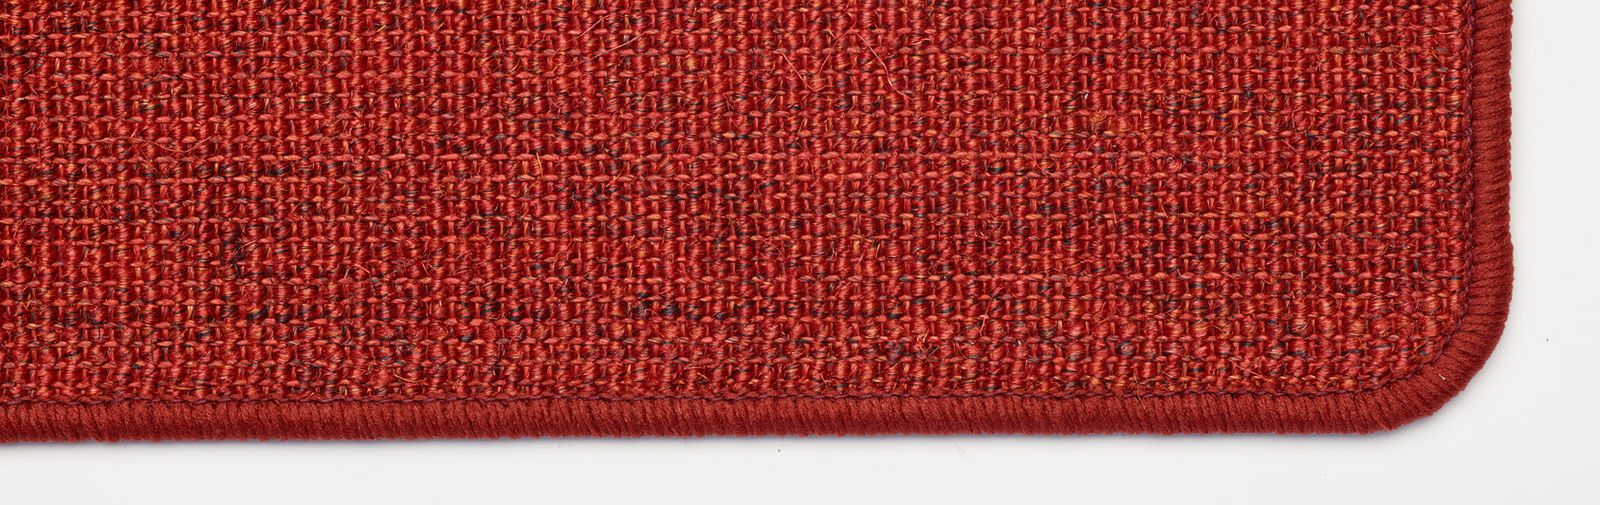 Kirchenteppich Sisal Farbe rot Farbcode 7401